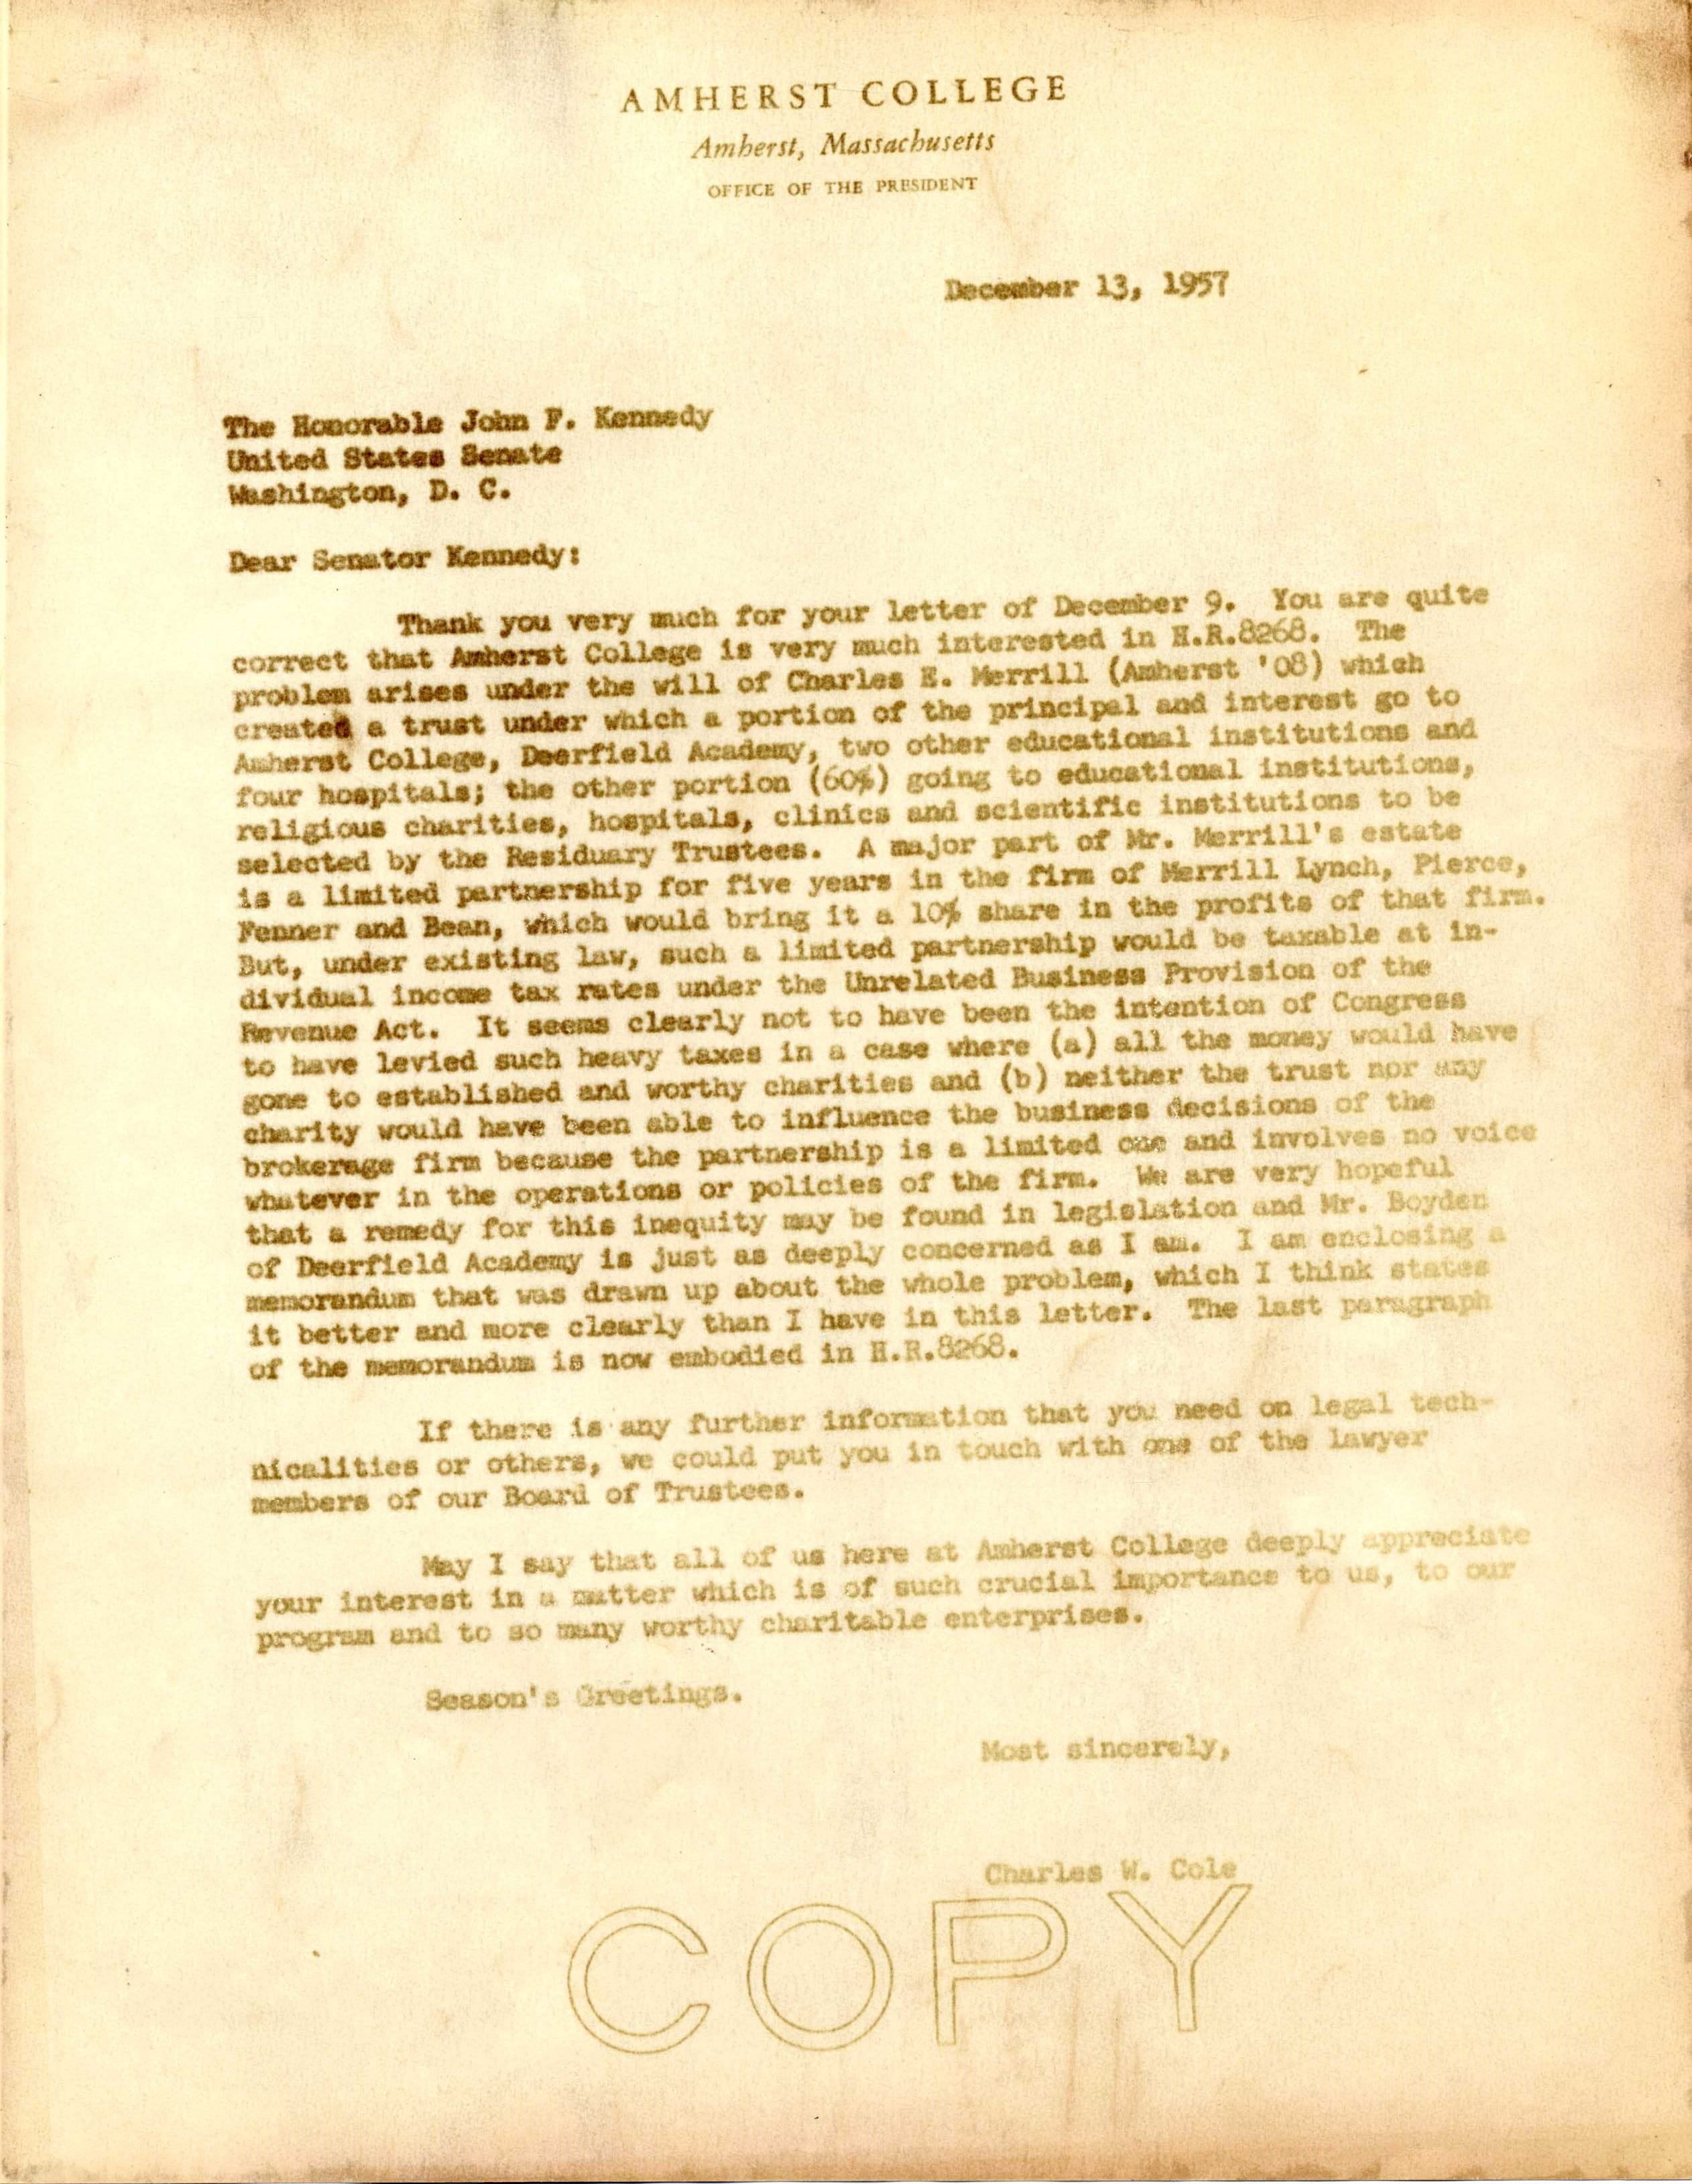 Charles W. Cole letter to Senator John F. Kennedy